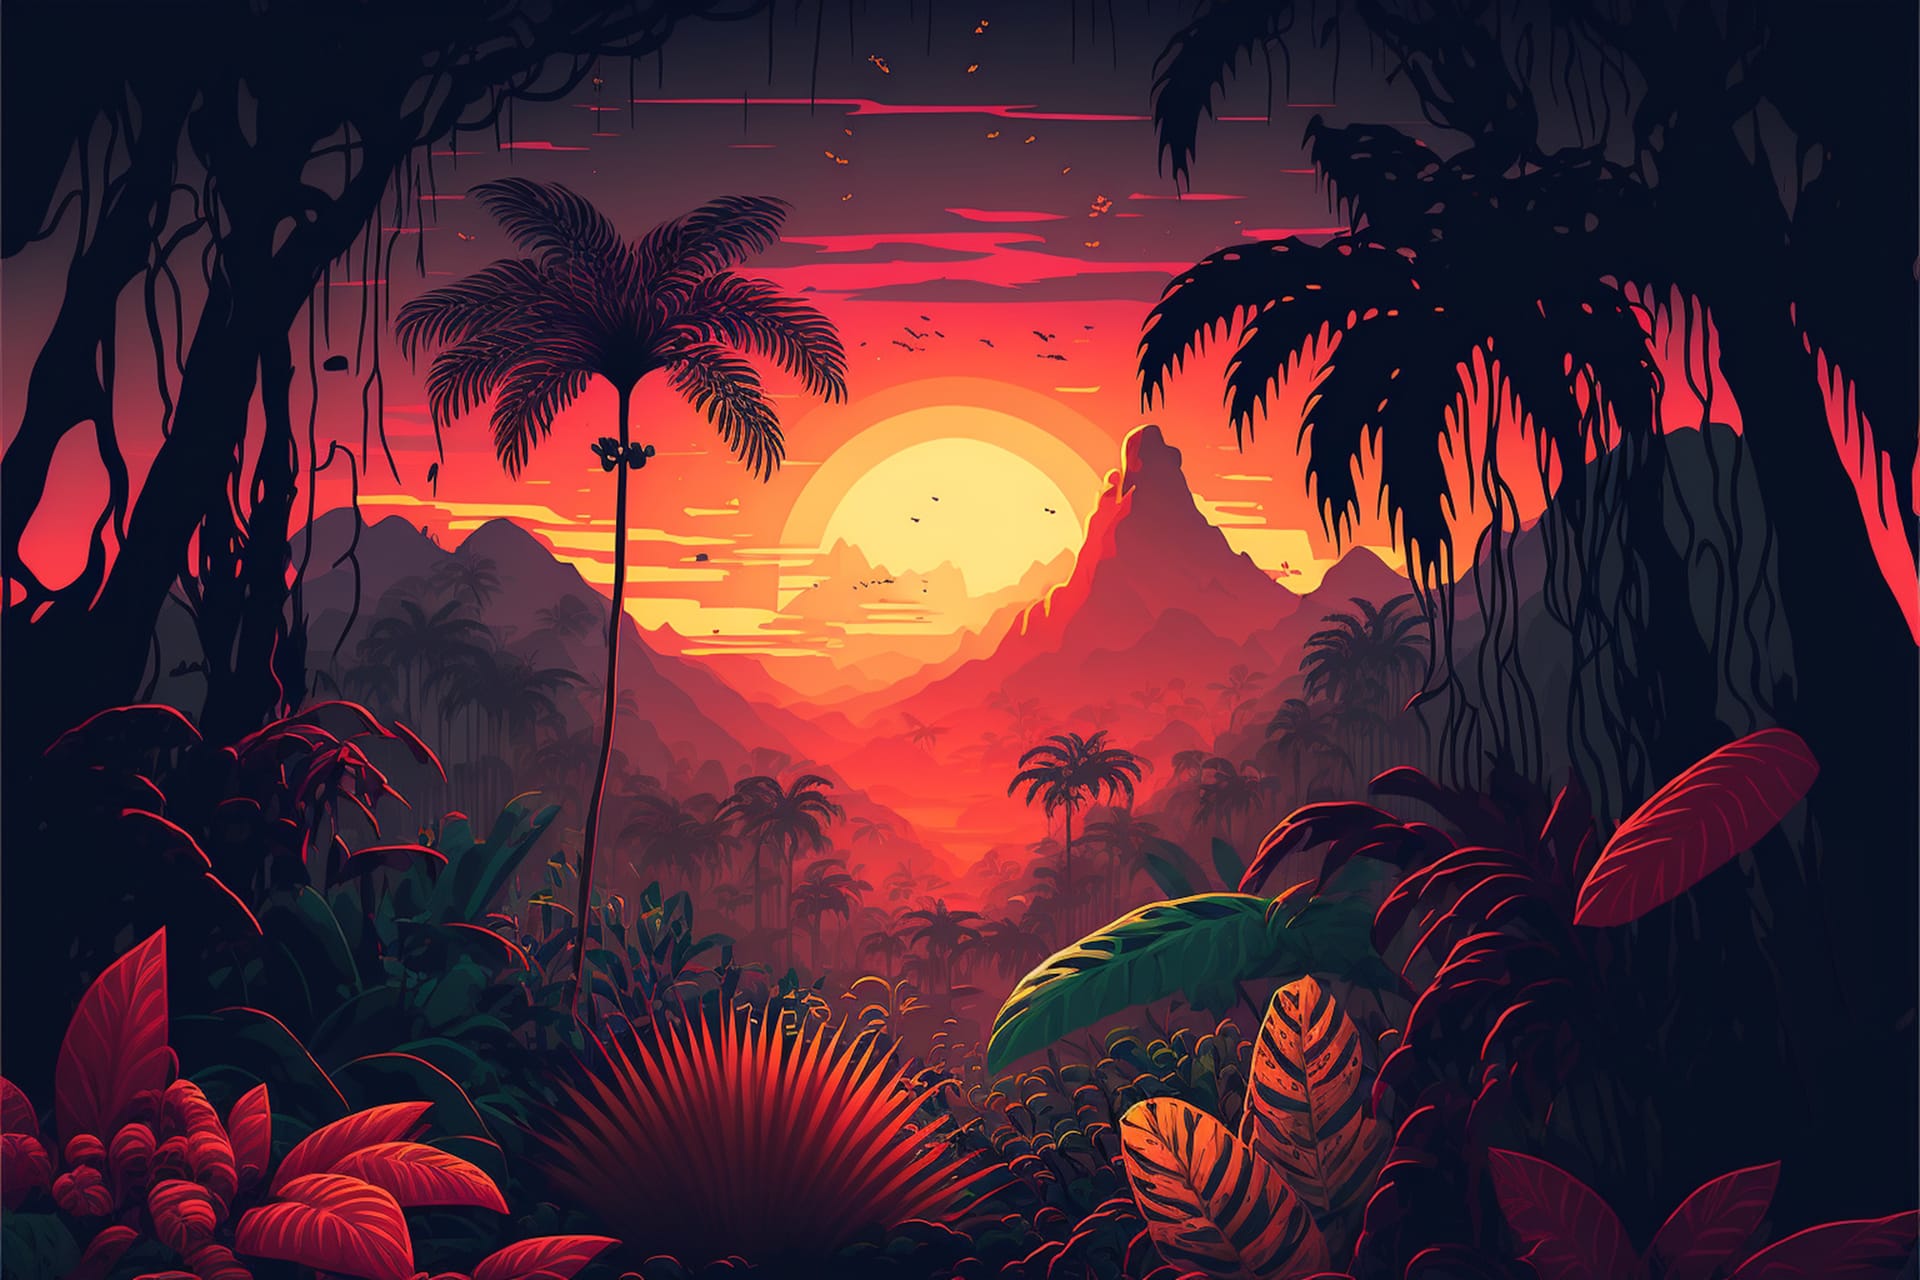 Jungle with vibrant sunset sunrise backdrop